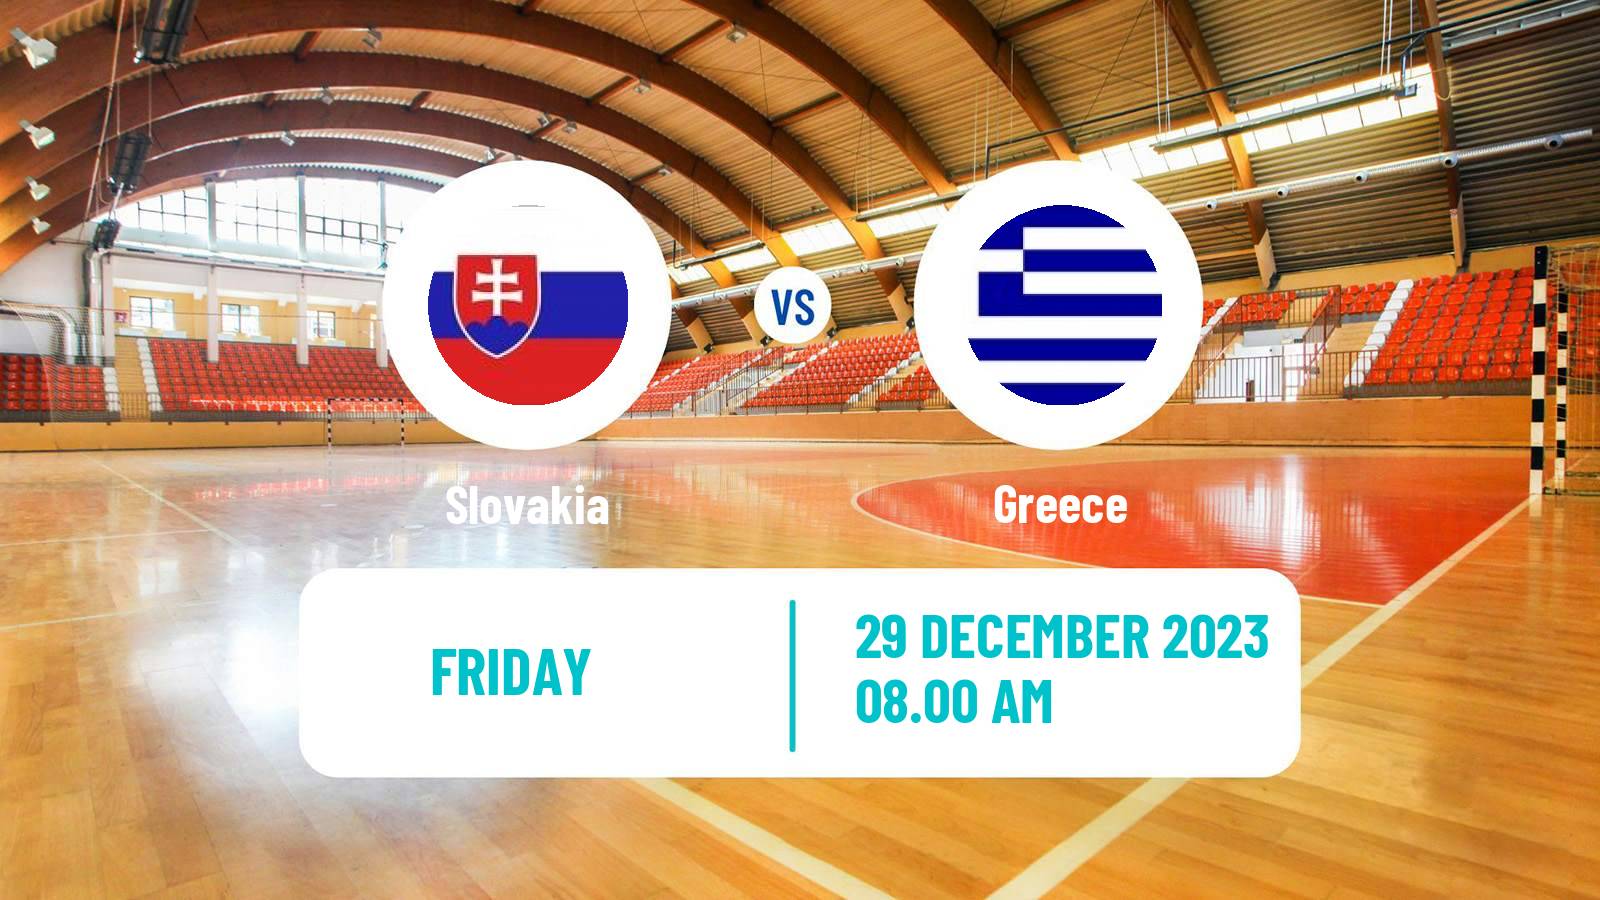 Handball Friendly International Handball Slovakia - Greece